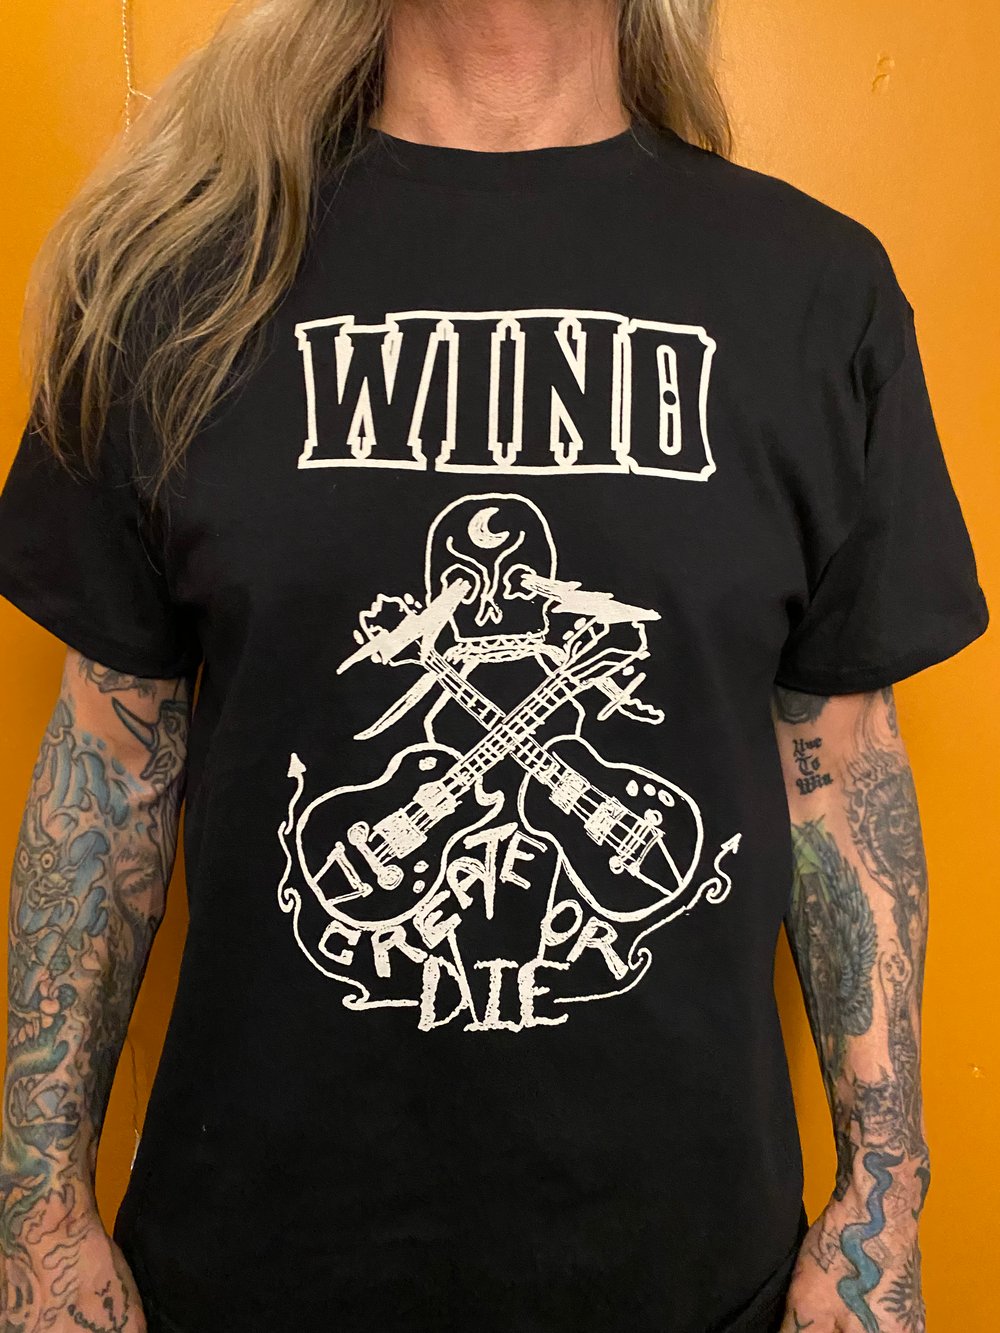 WINO "CREATE OR DIE" Shirt